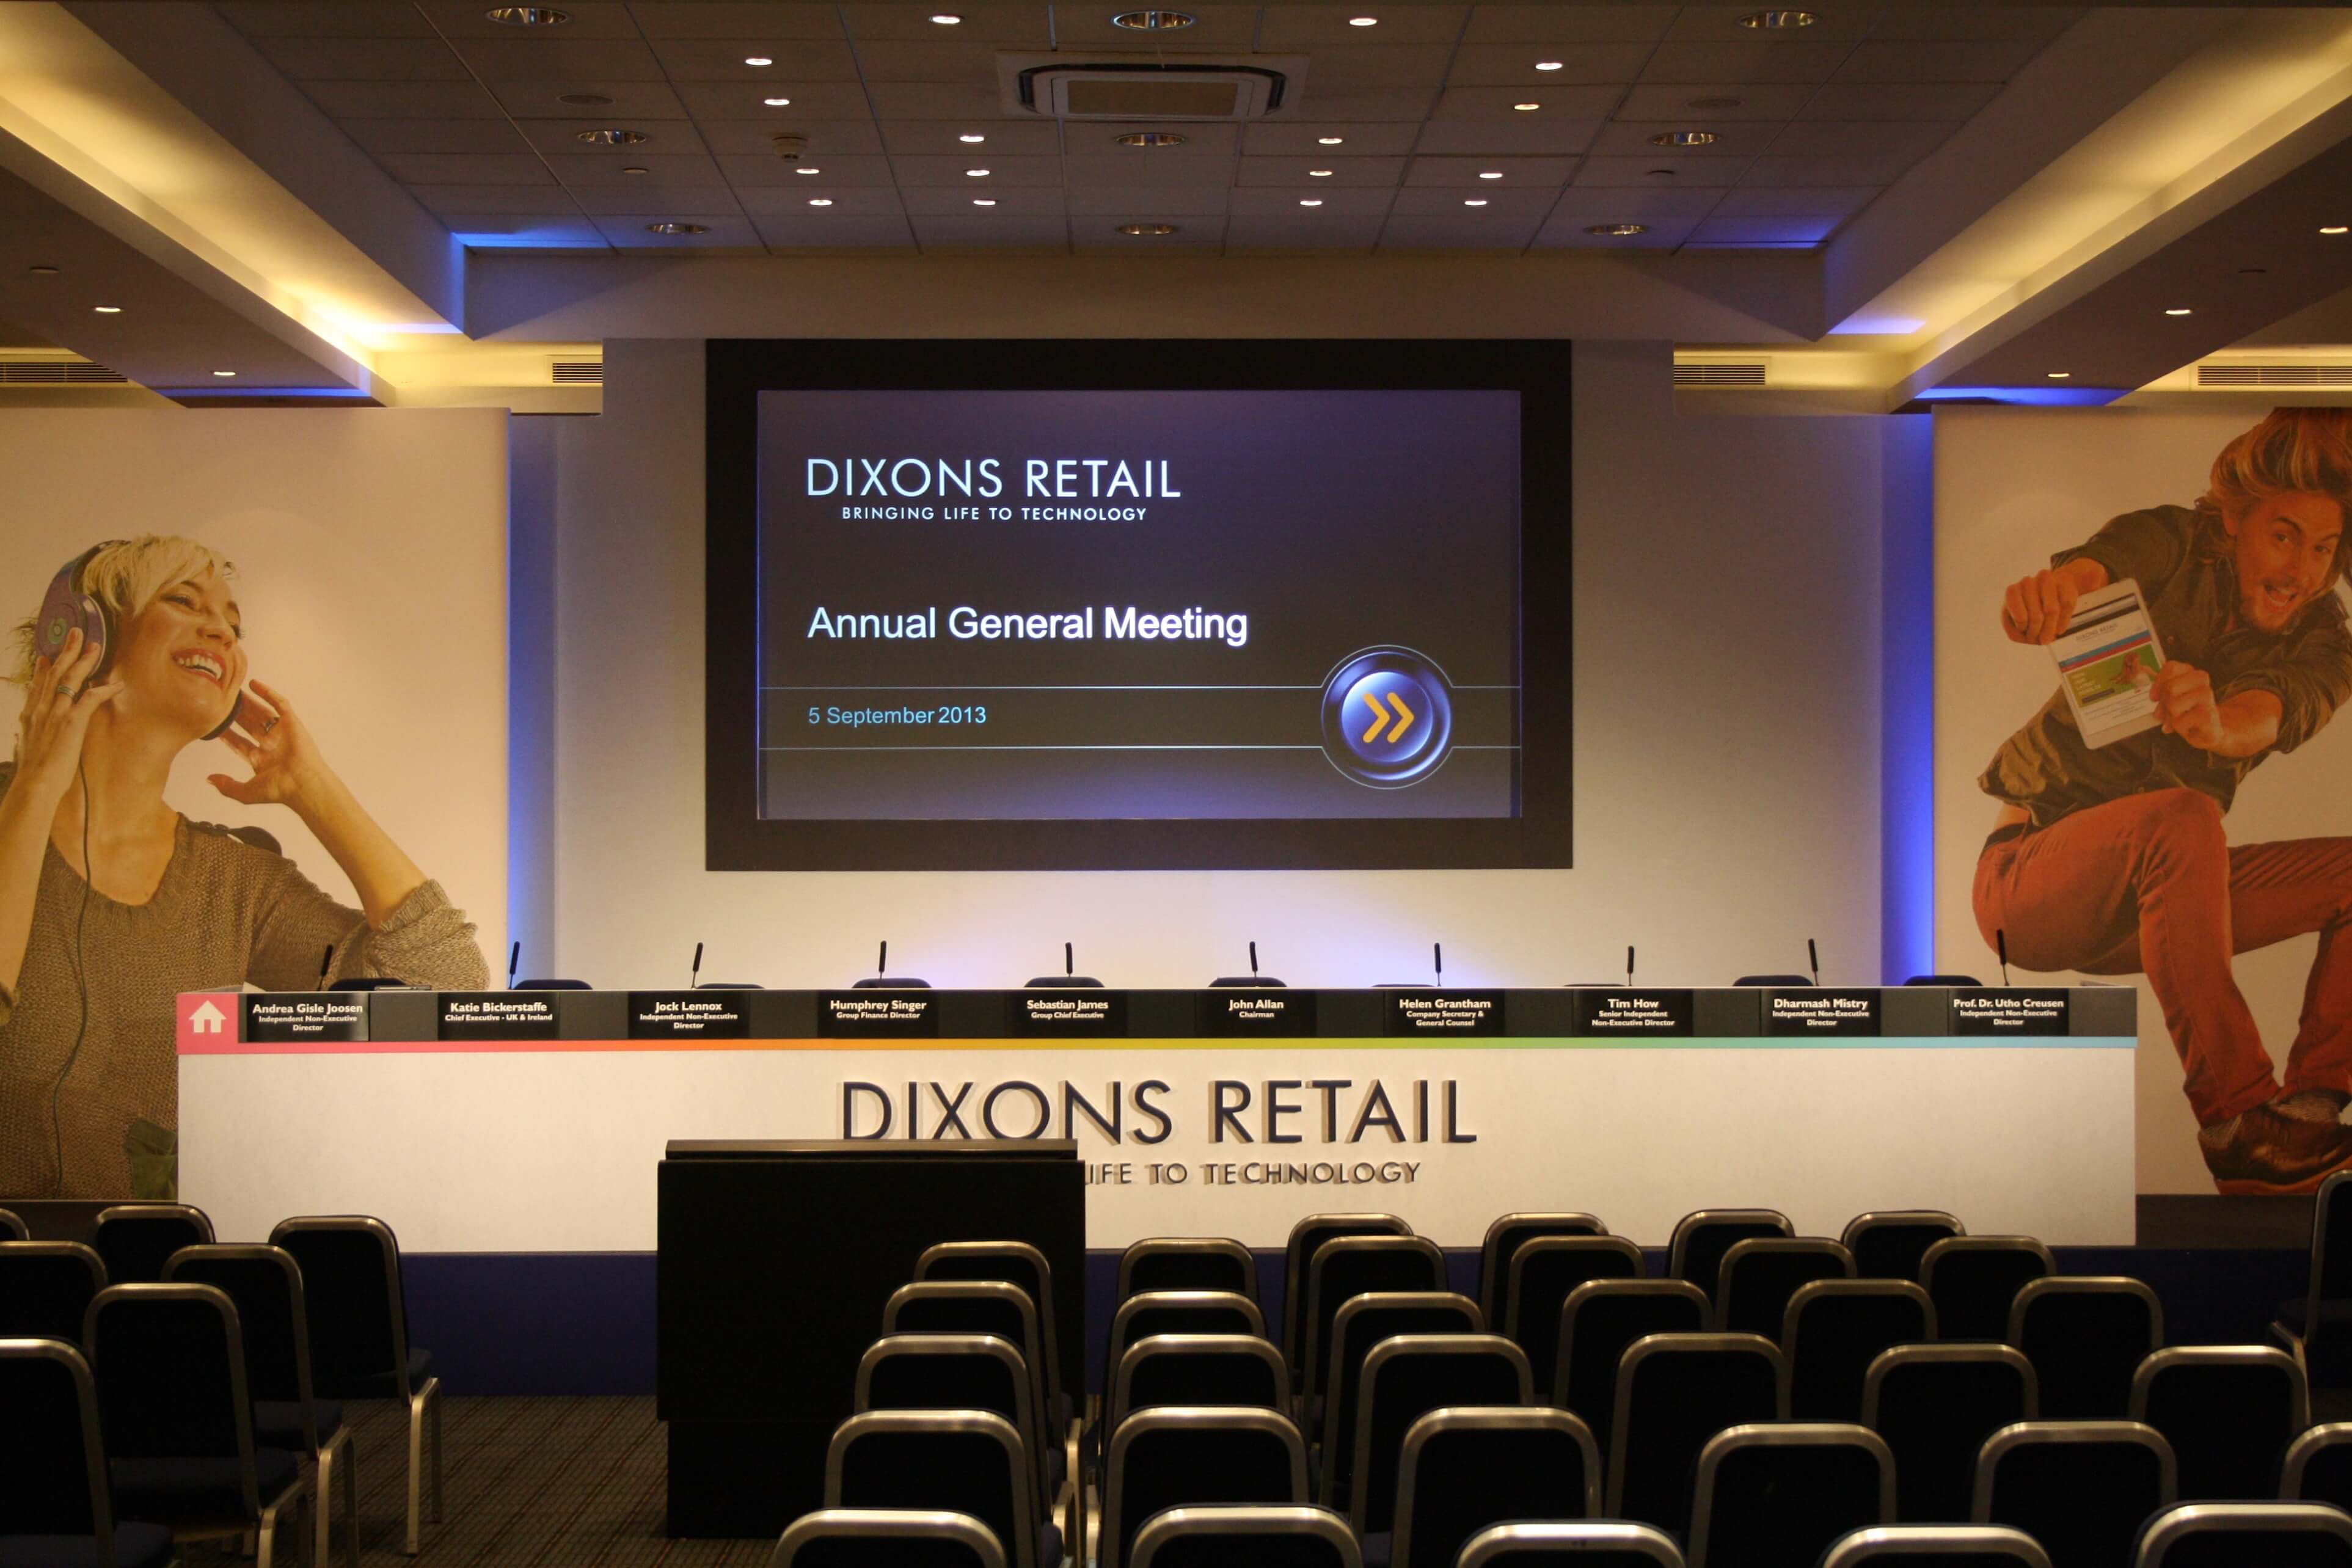 Event management for Dixons retail